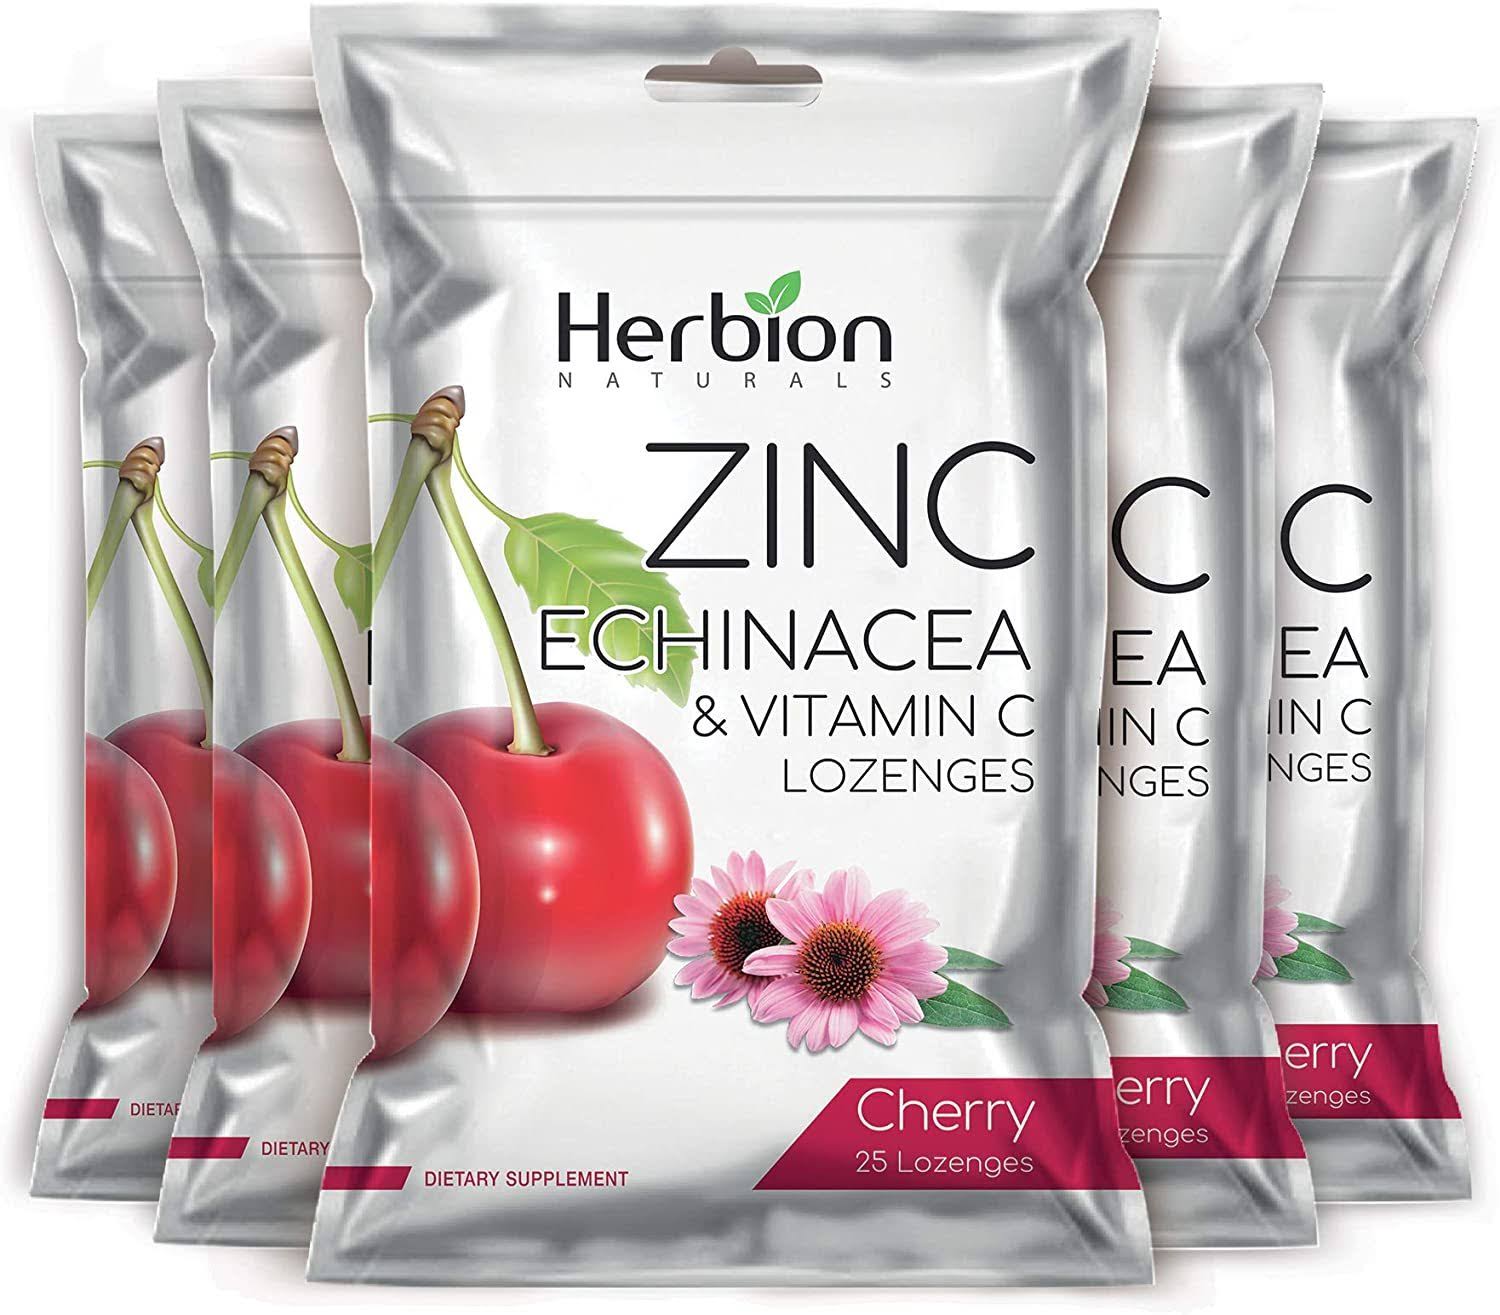 Herbion Naturals Zinc, Vitamin C Lozenges, Supports Immune -Cherry Flavor-1 Pack